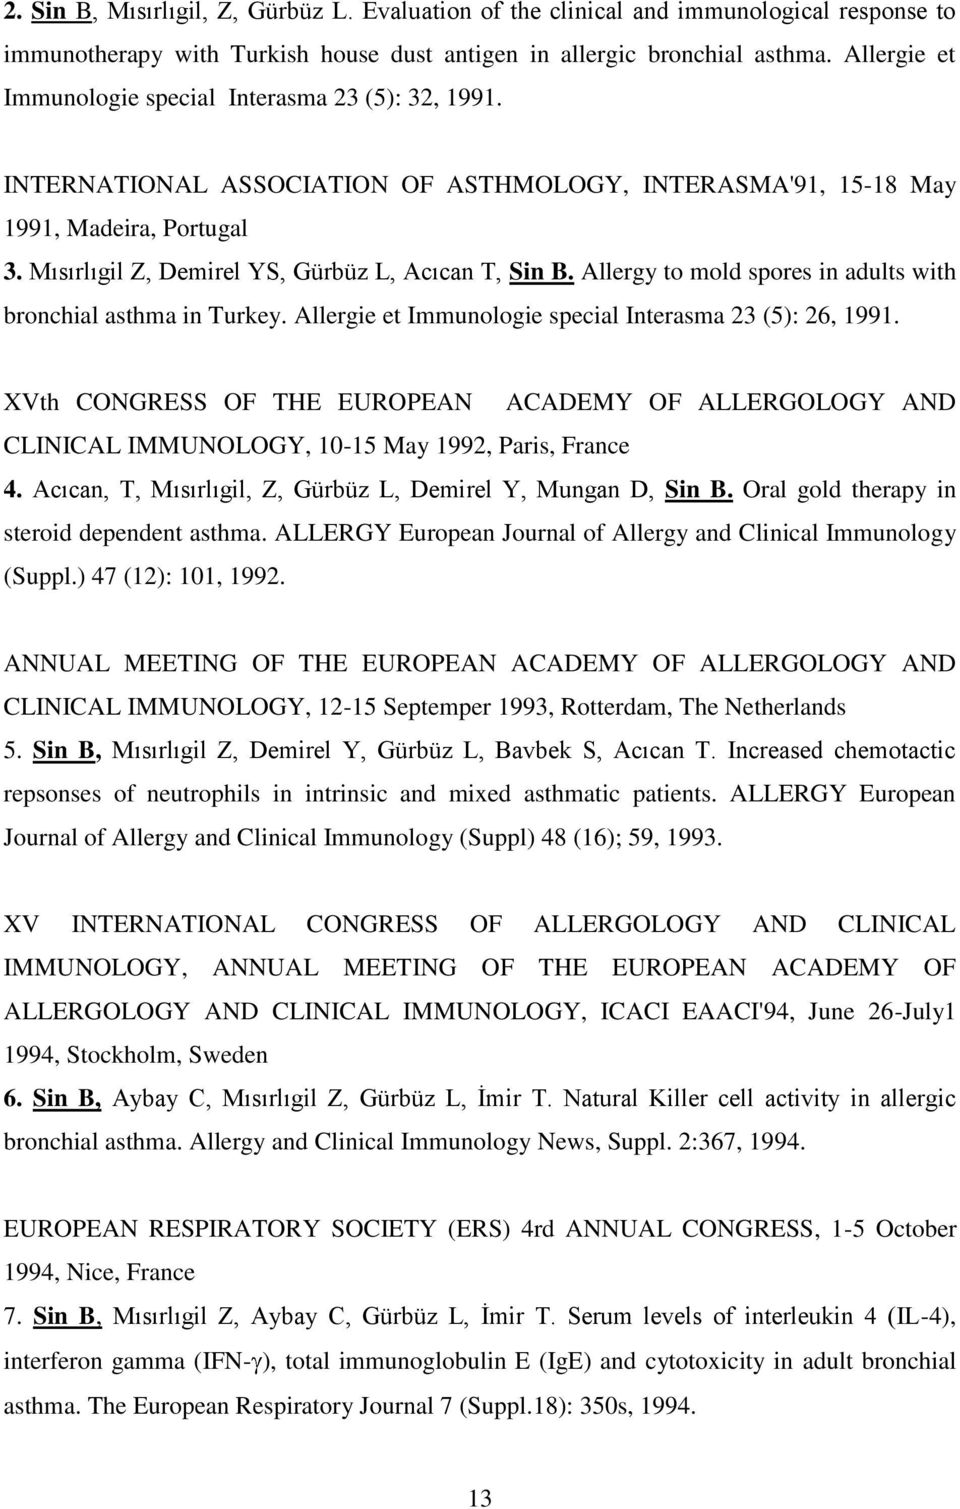 Mısırlıgil Z, Demirel YS, Gürbüz L, Acıcan T, Sin B. Allergy to mold spores in adults with bronchial asthma in Turkey. Allergie et Immunologie special Interasma 23 (5): 26, 1991.